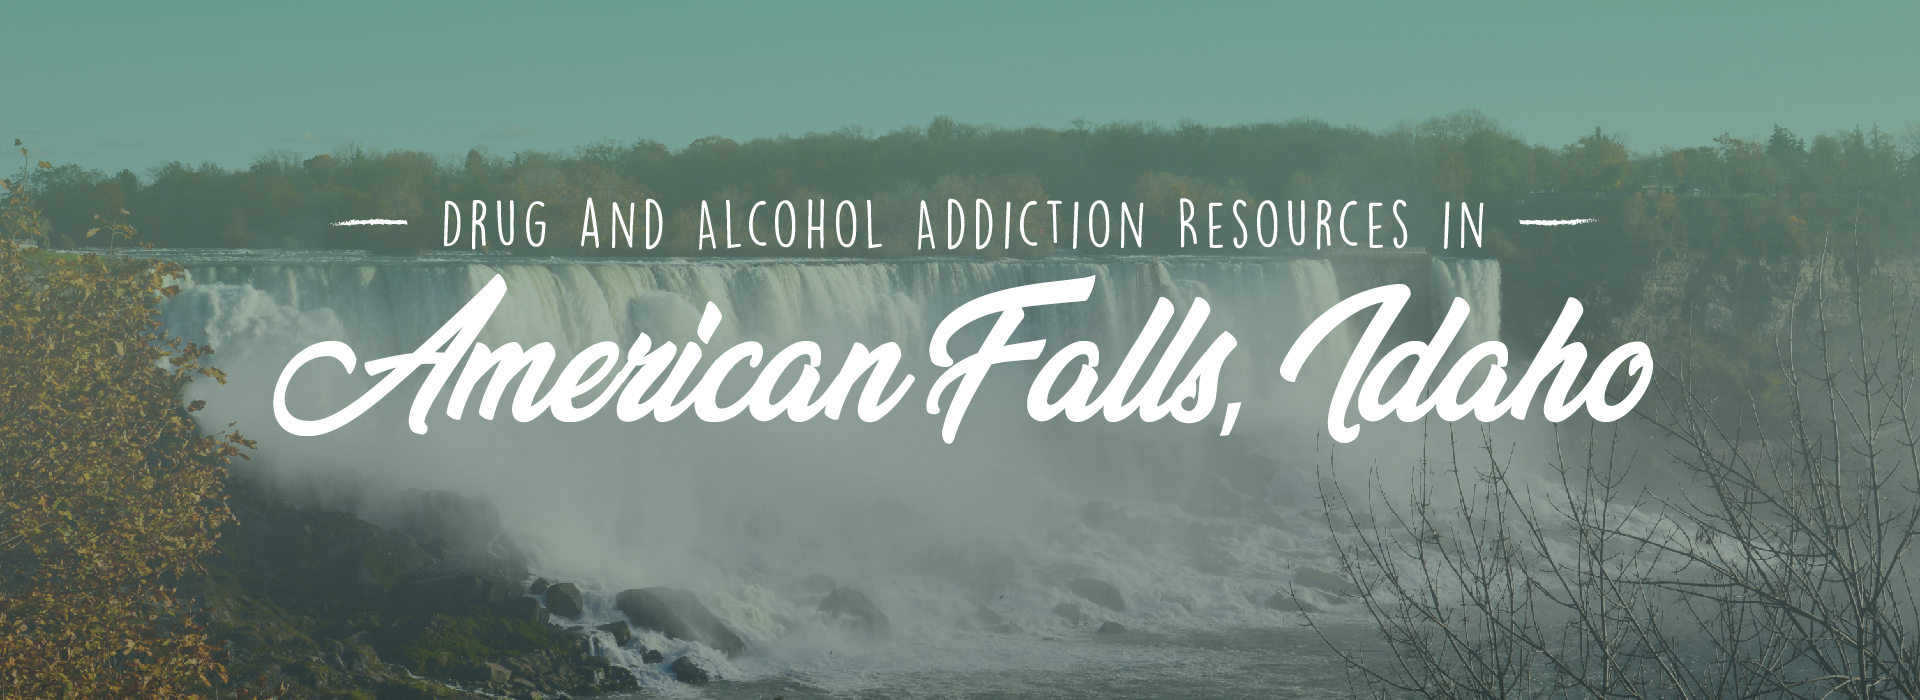 American Falls, Idaho addiction resources